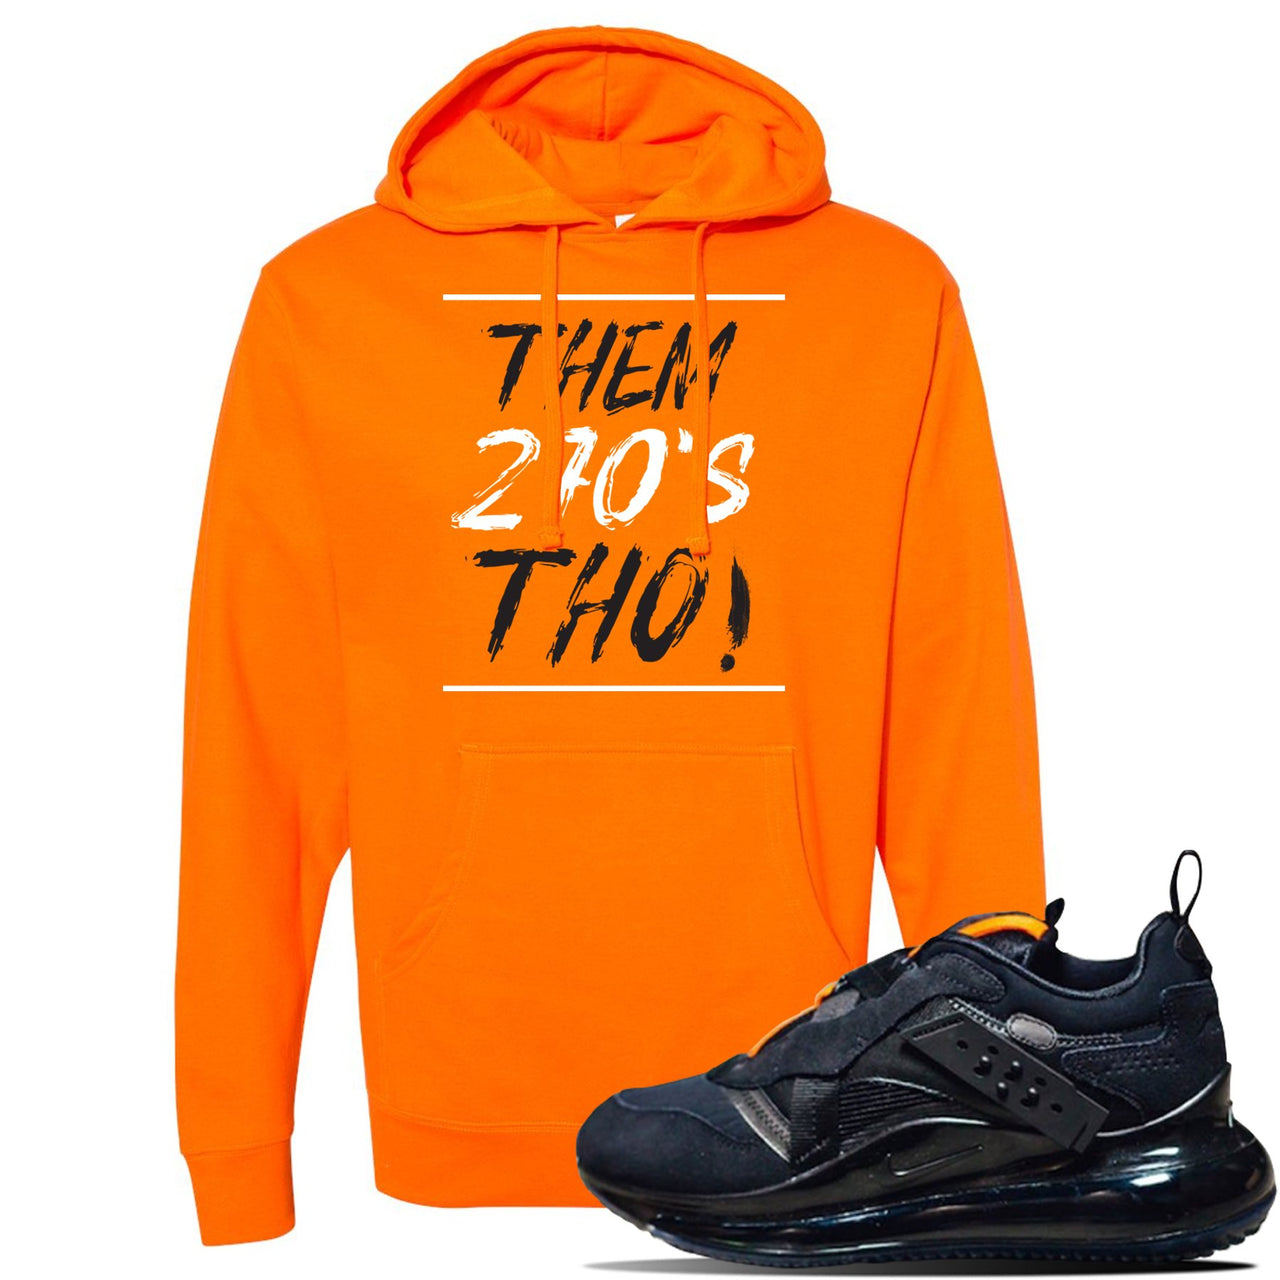 Air Max 720 OBJ Slip Sneaker Safety Orange Pullover Hoodie | Hoodie to match Nike Air Max 720 OBJ Slip Shoes | Them 720's Tho